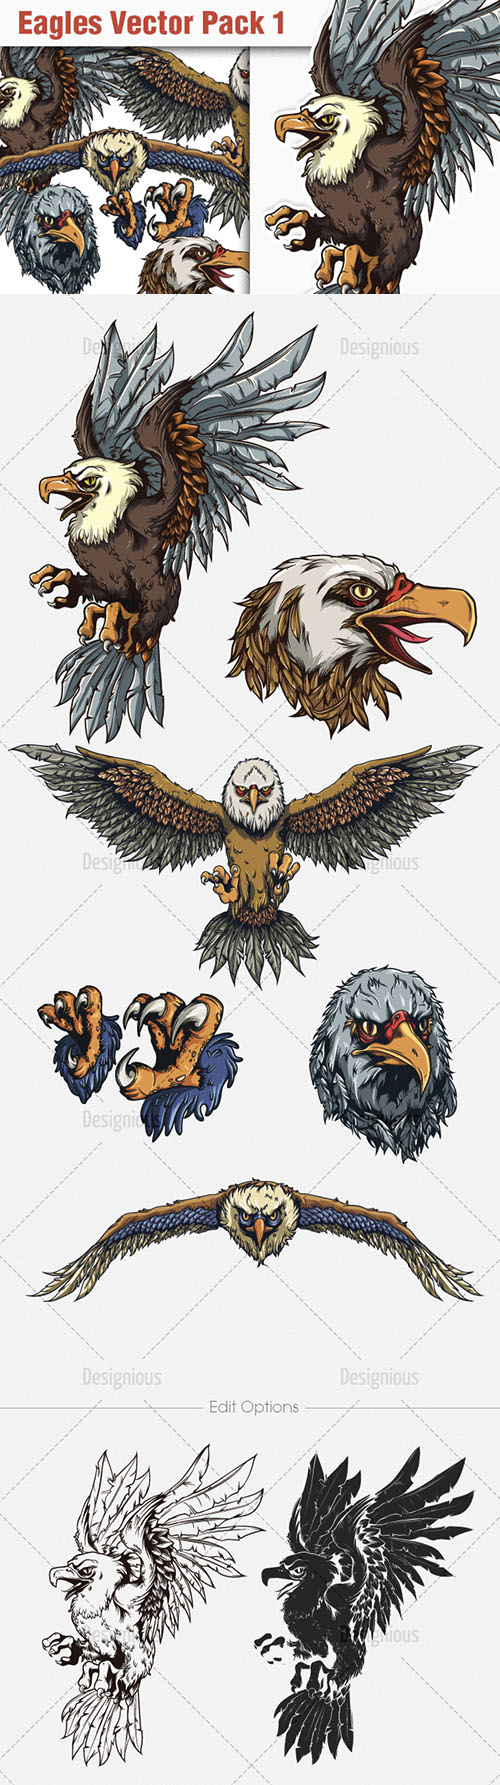 Eagles Vector Illustrations Pack 1